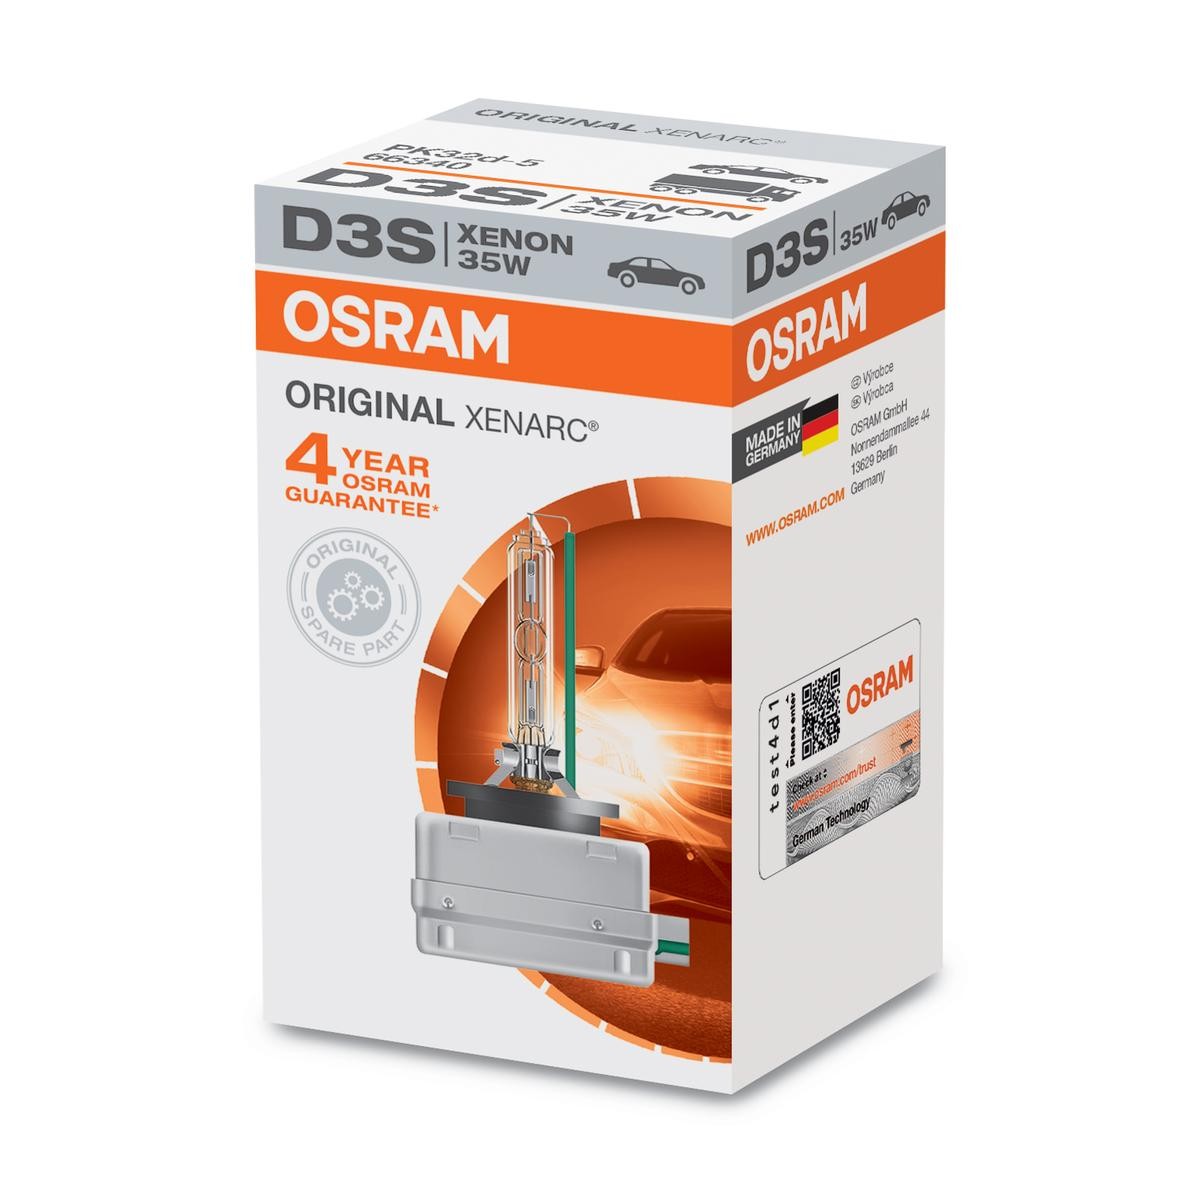 OSRAM XENARC ORIGINAL 66340 Bulb, spotlight D3S 42V 35W PK32d-5, 4100K, Xenon